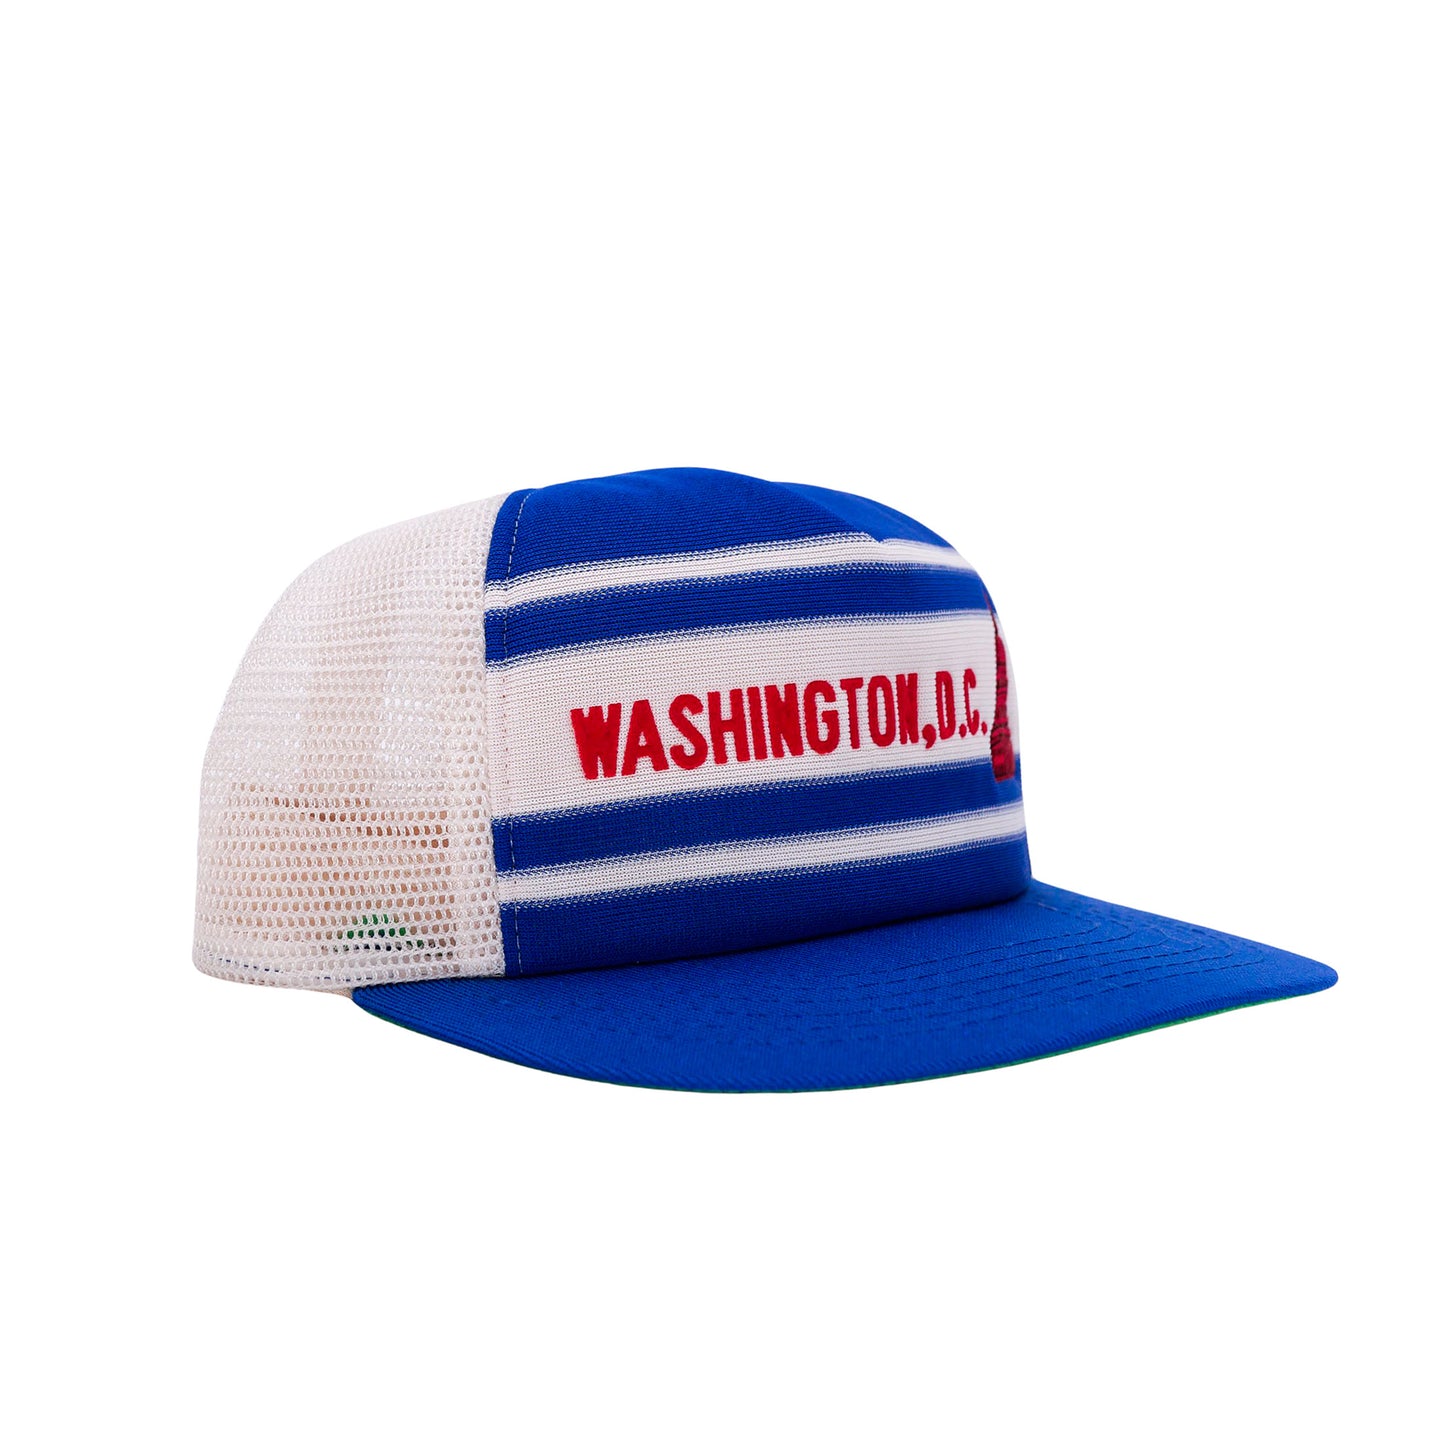 WASHINGTON D.C. TRUCKER CAP